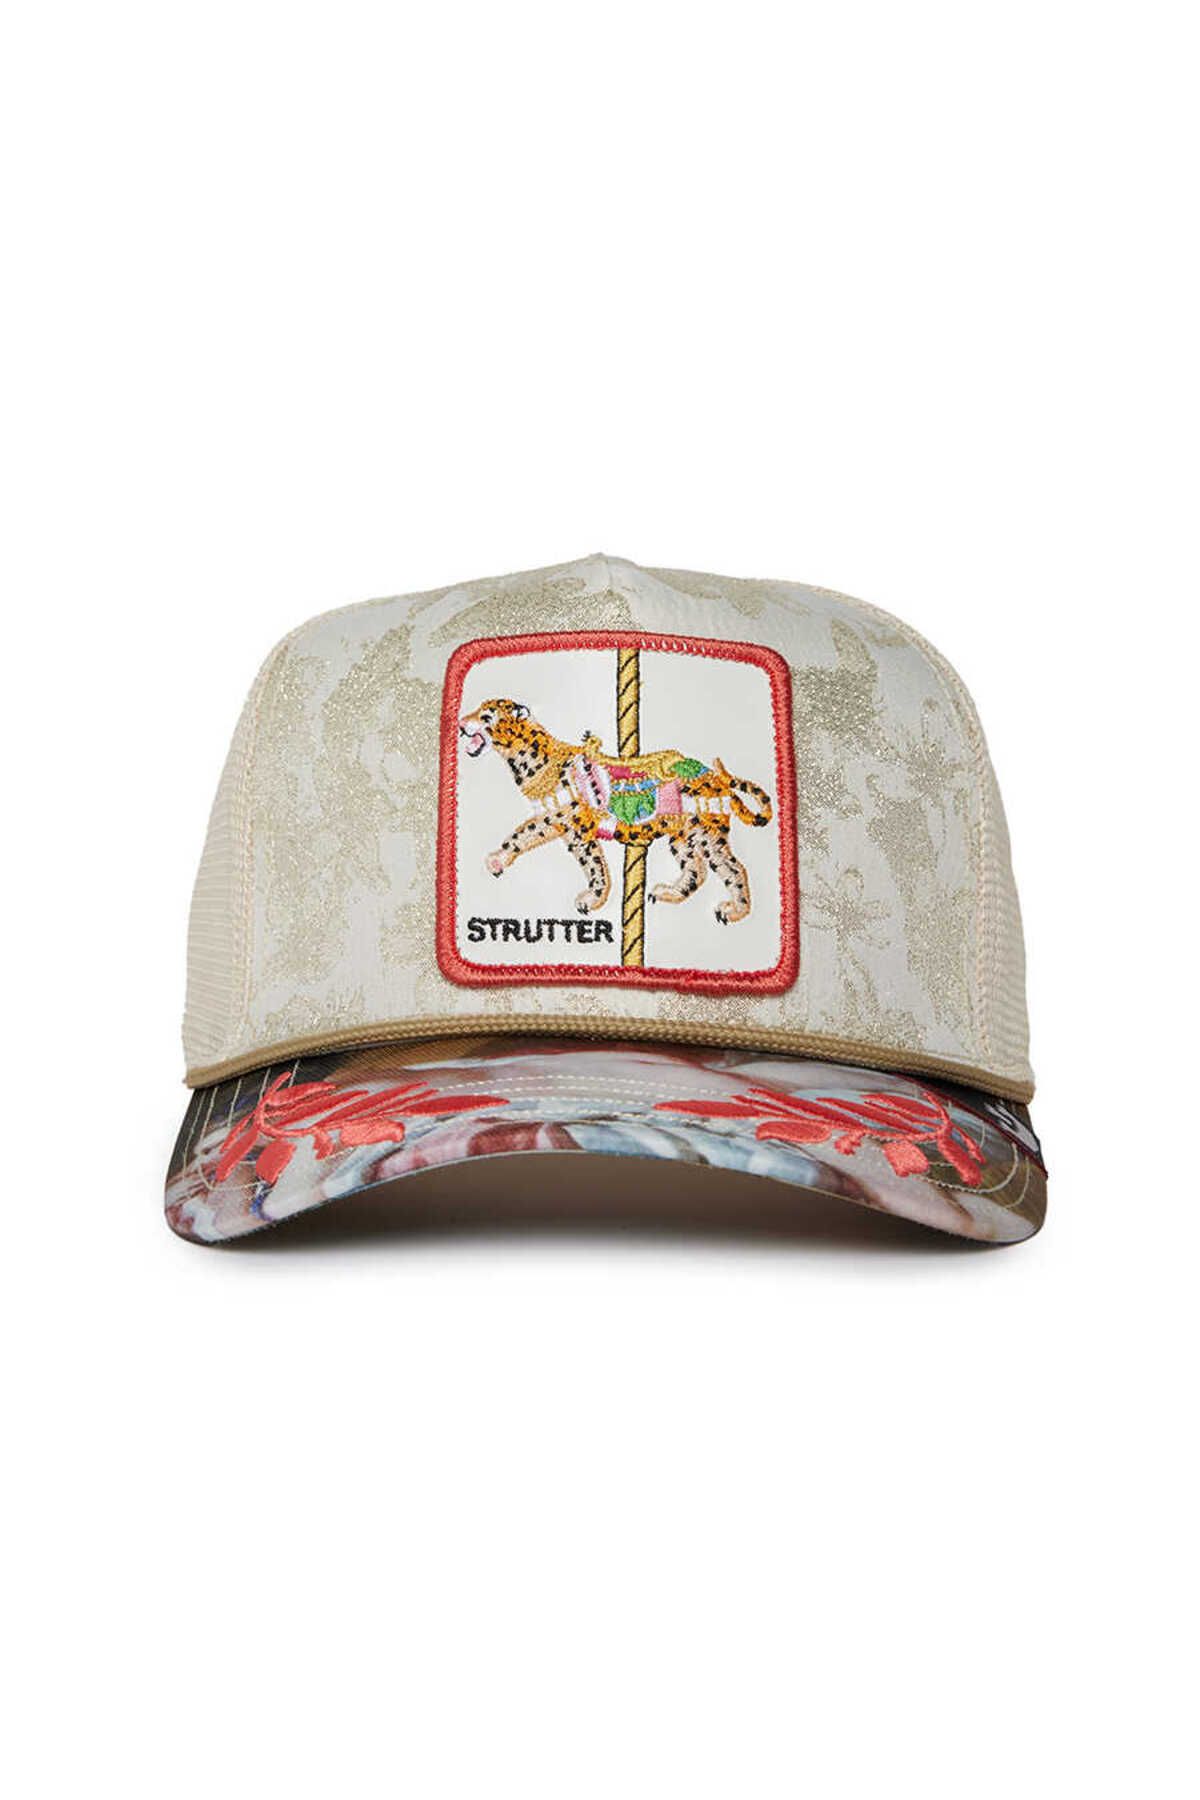 Goorin Bros Quid Glorier ( Atlı Karınca Puma Figürlü ) Şapka 101-0311